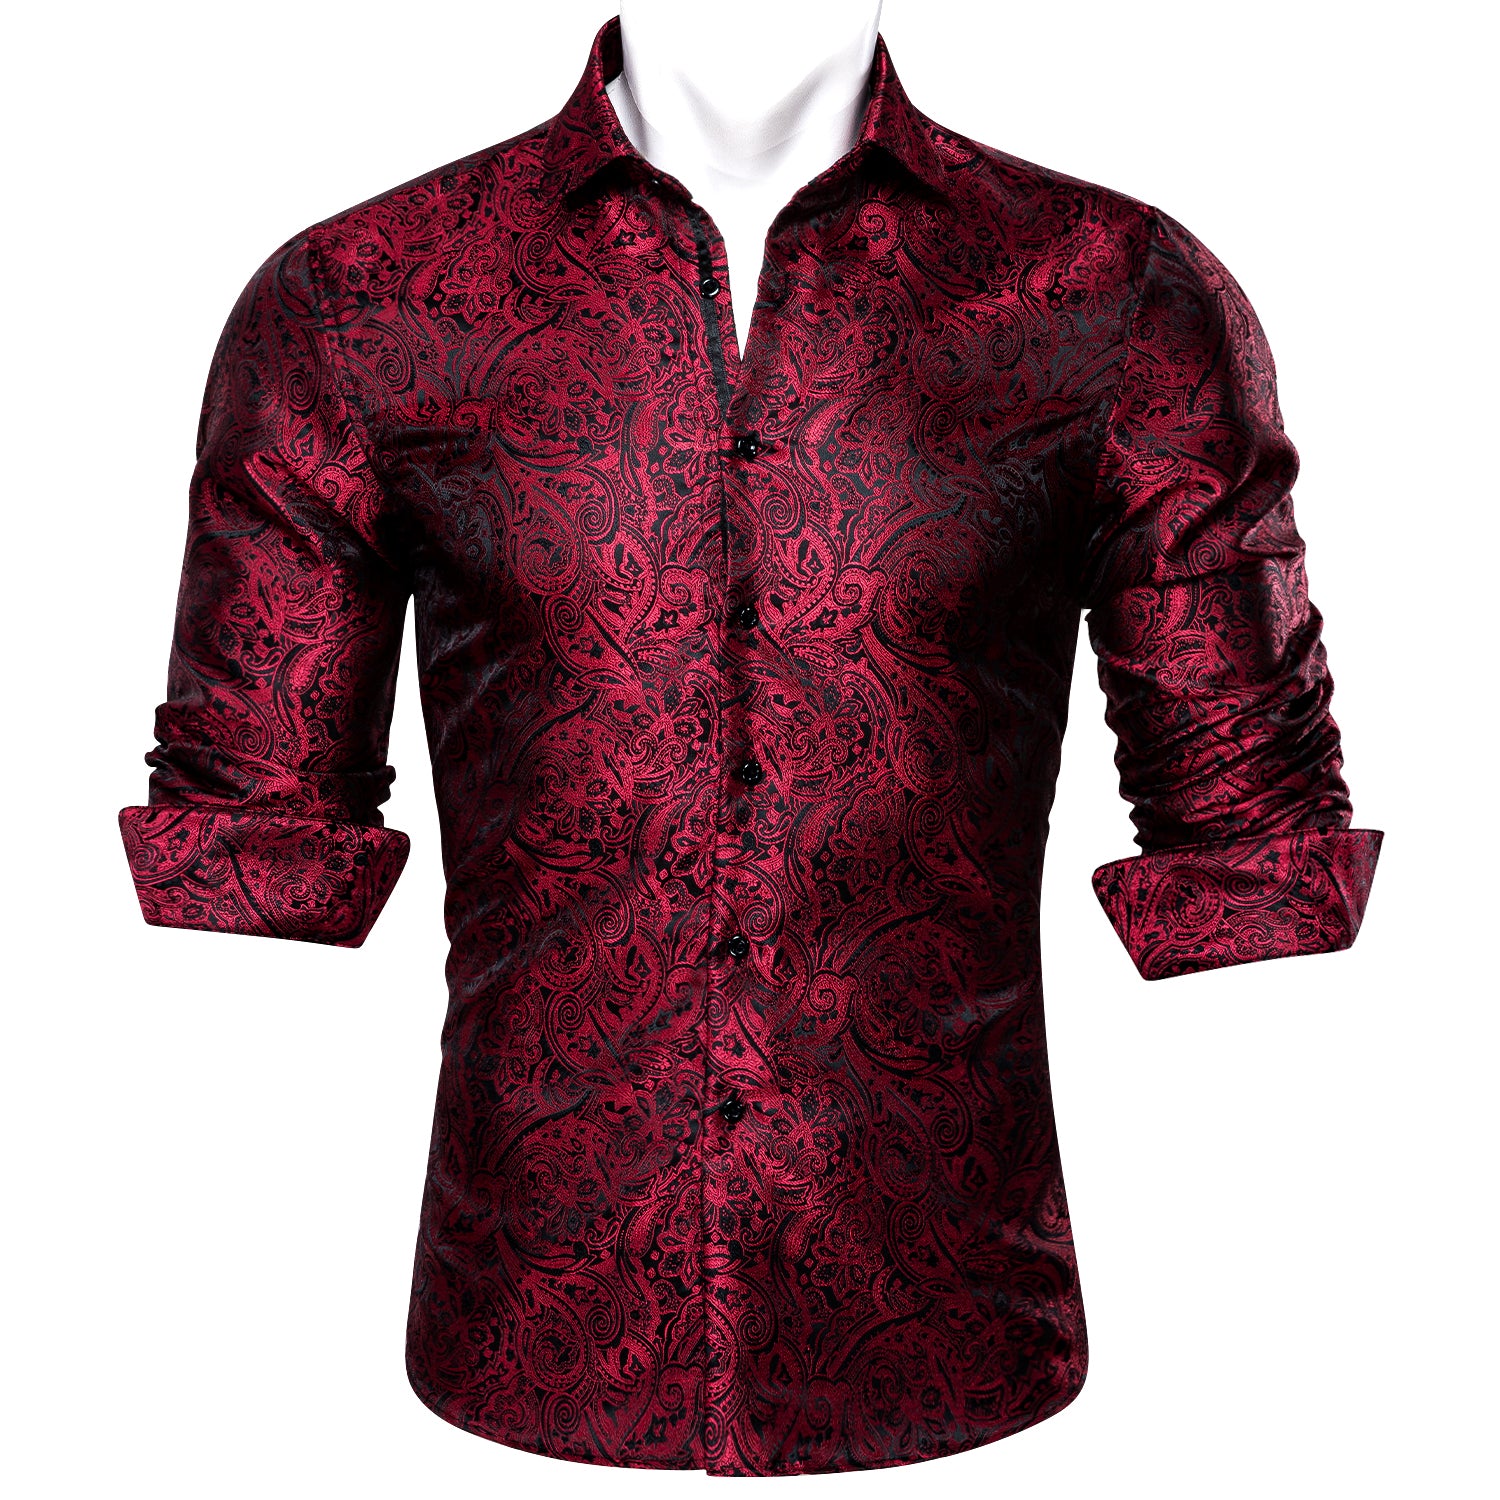 Barry.wang Black Red Paisley Silk Men's Shirt